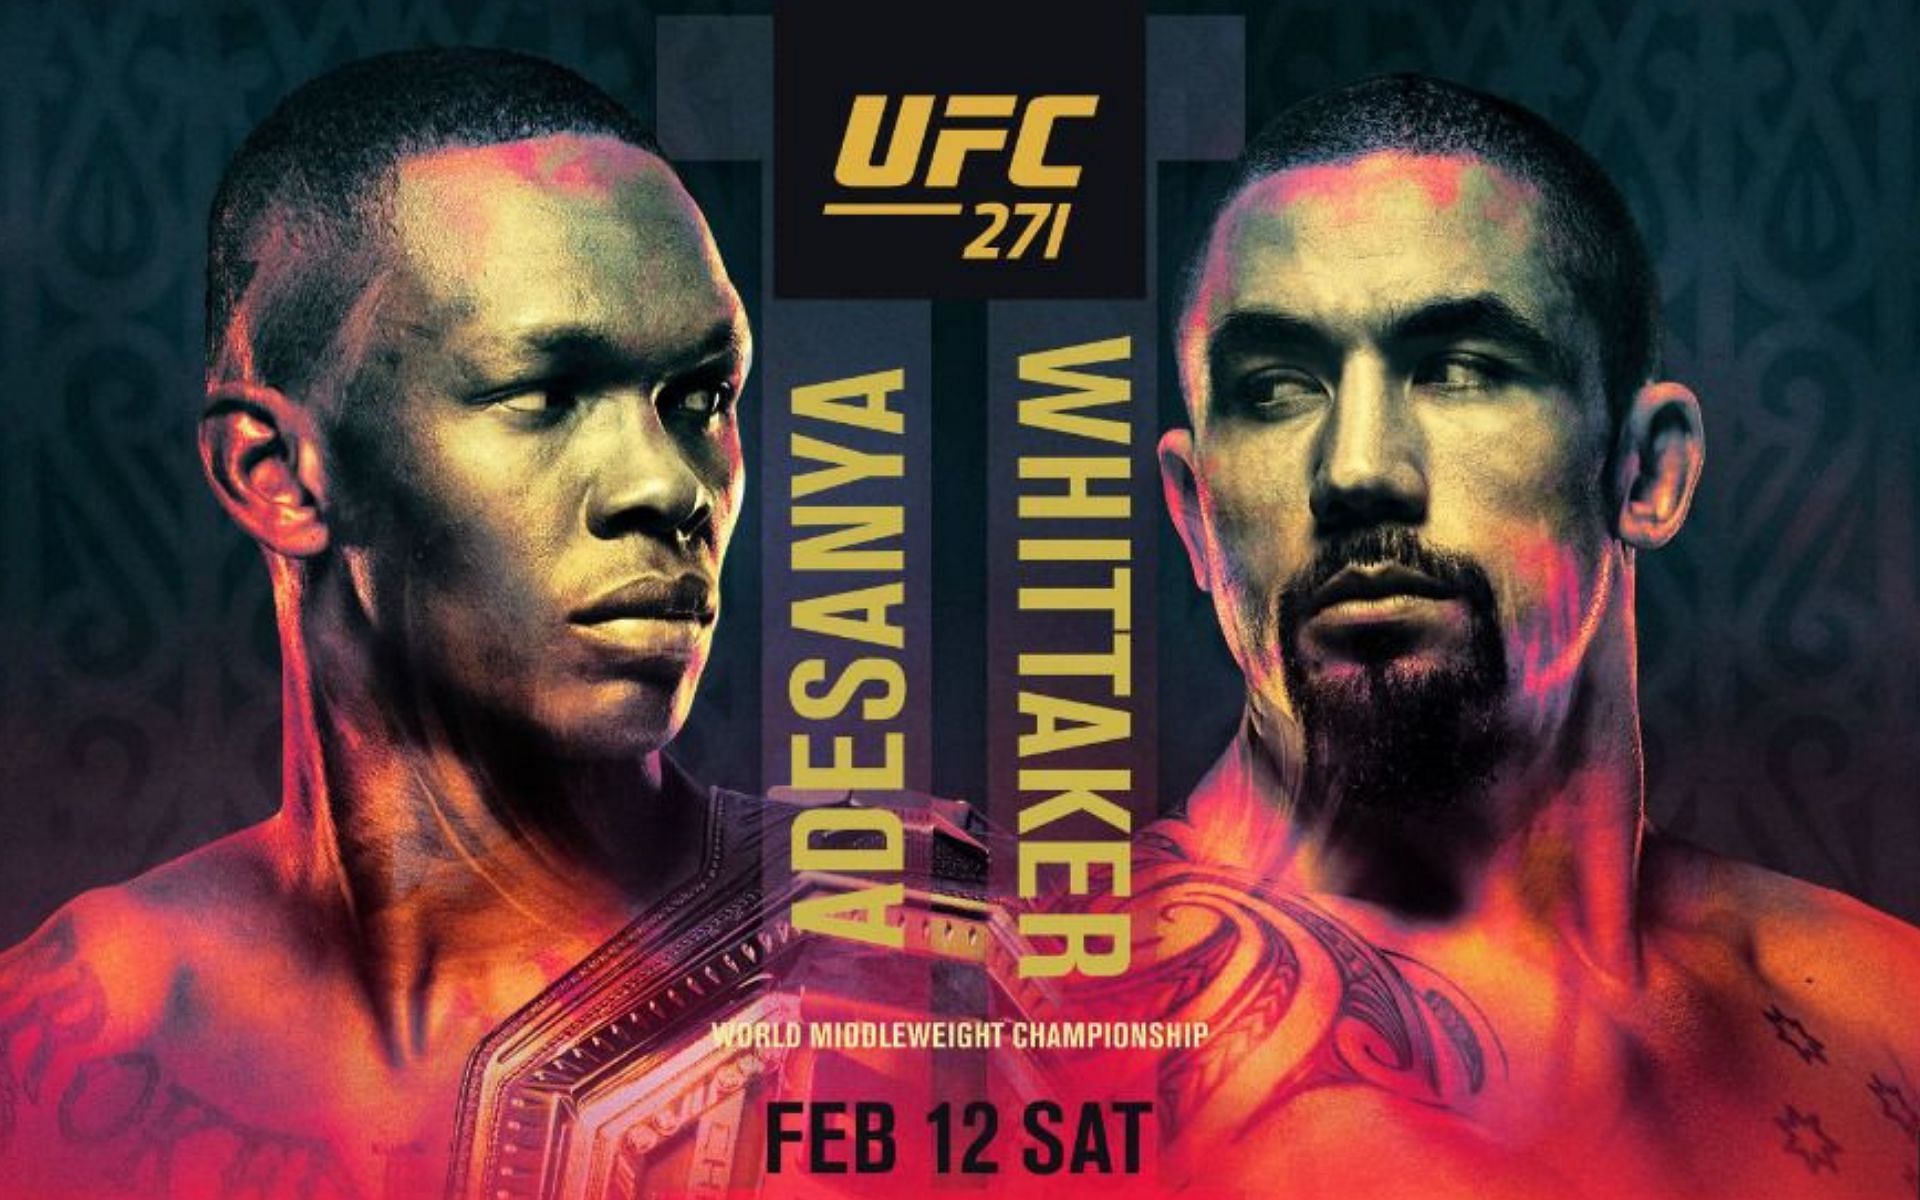 UFC 271 Adesanya vs. Whittaker 2 official poster [Image credits: ufc.com]